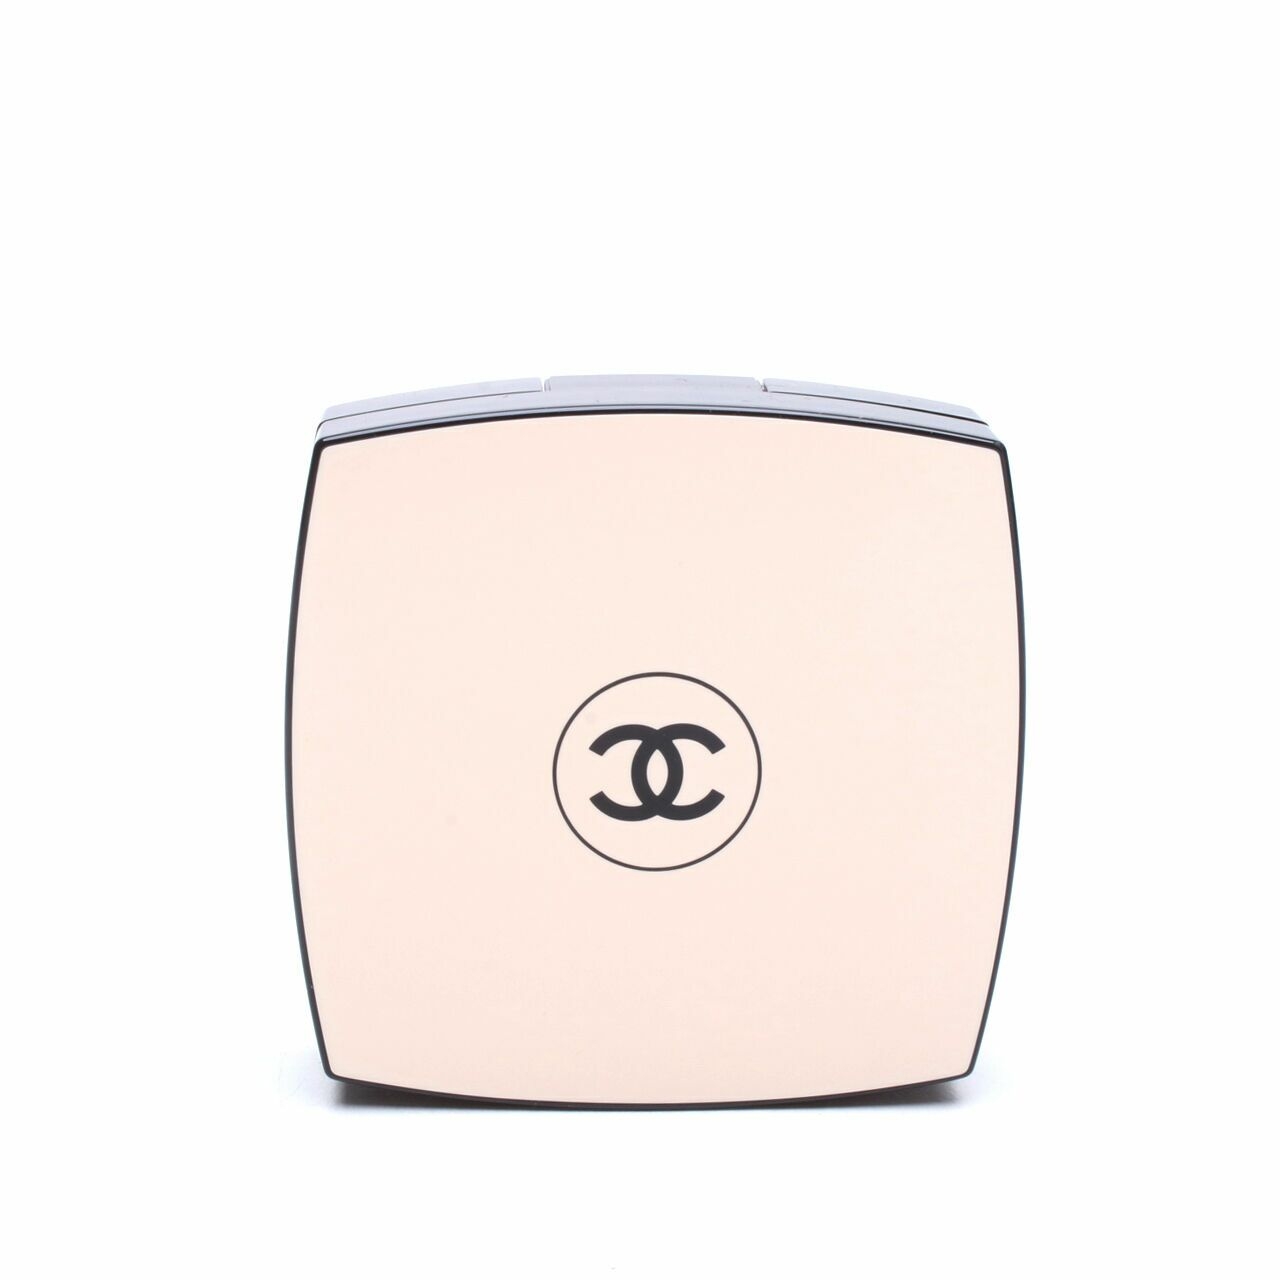 Chanel Les Beiges Poudre Belle Mine Naturelle Healthy Glow Sheer Powder